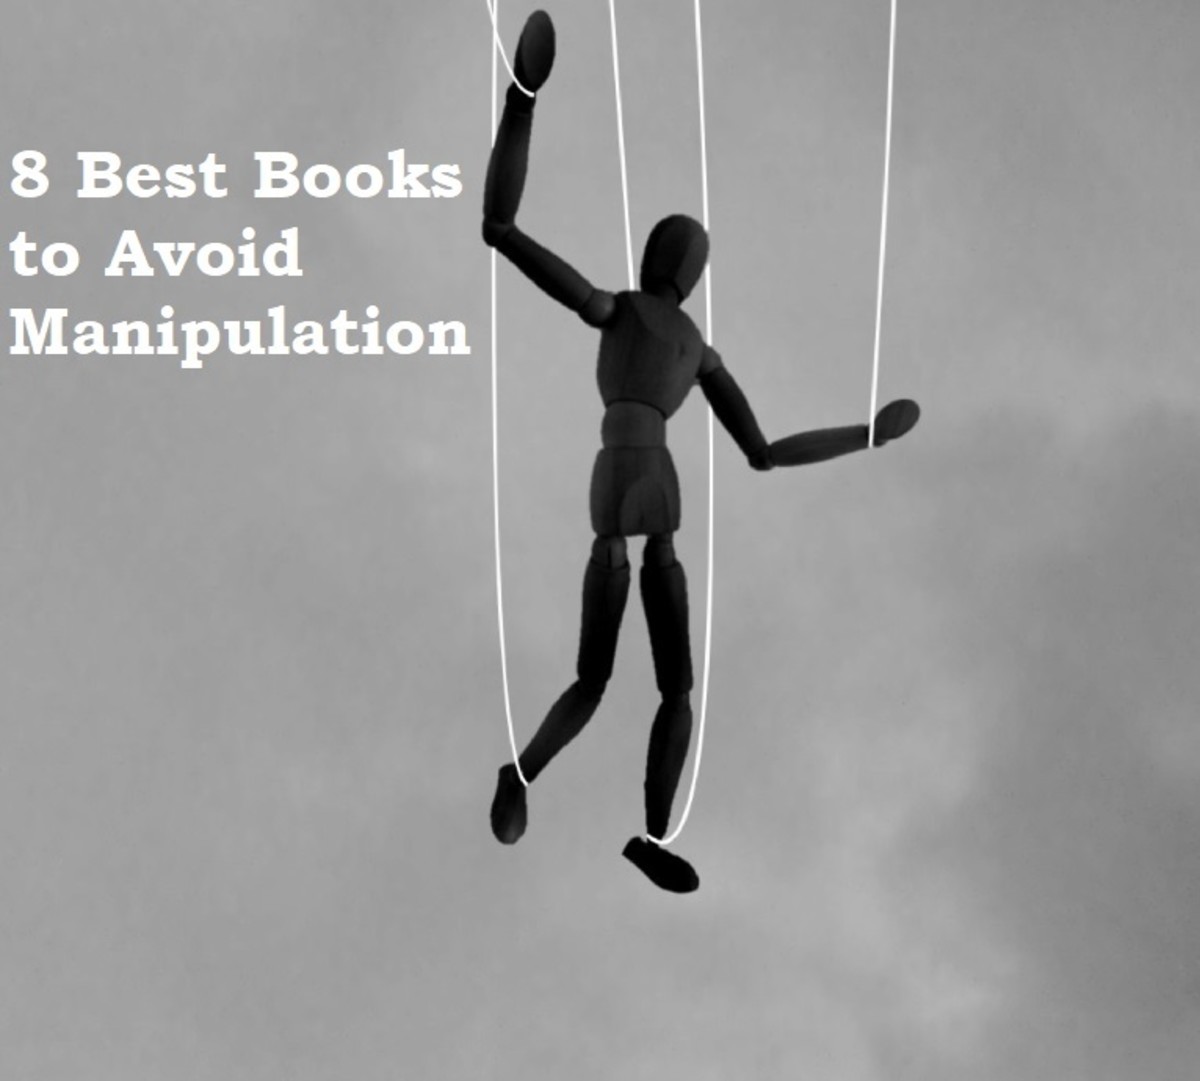 Best books to avoid manipulation